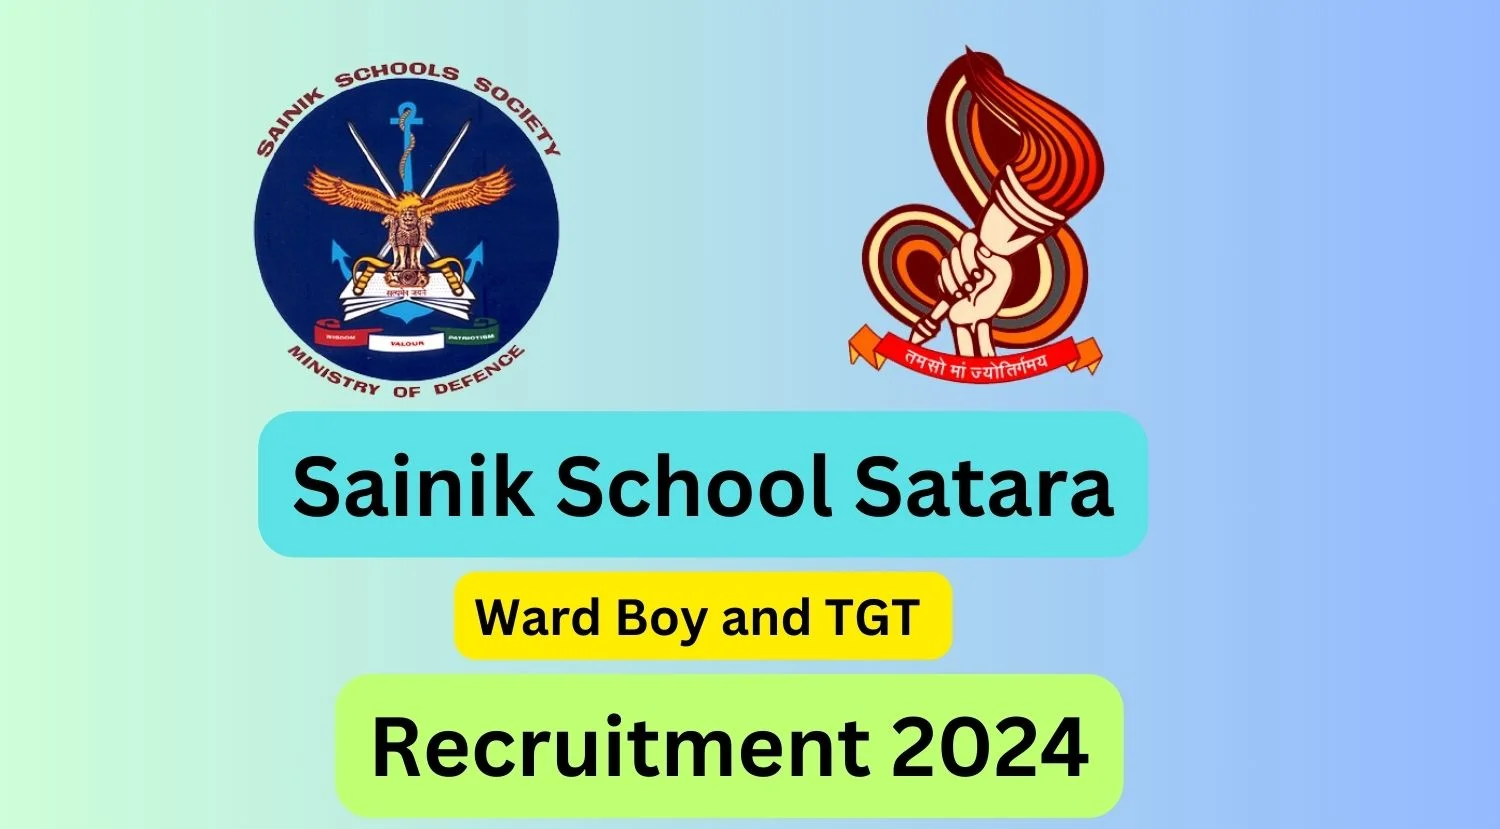 Sainik School Satara Recruitment 2024 - Apply for Ward Boy and TGT Posts